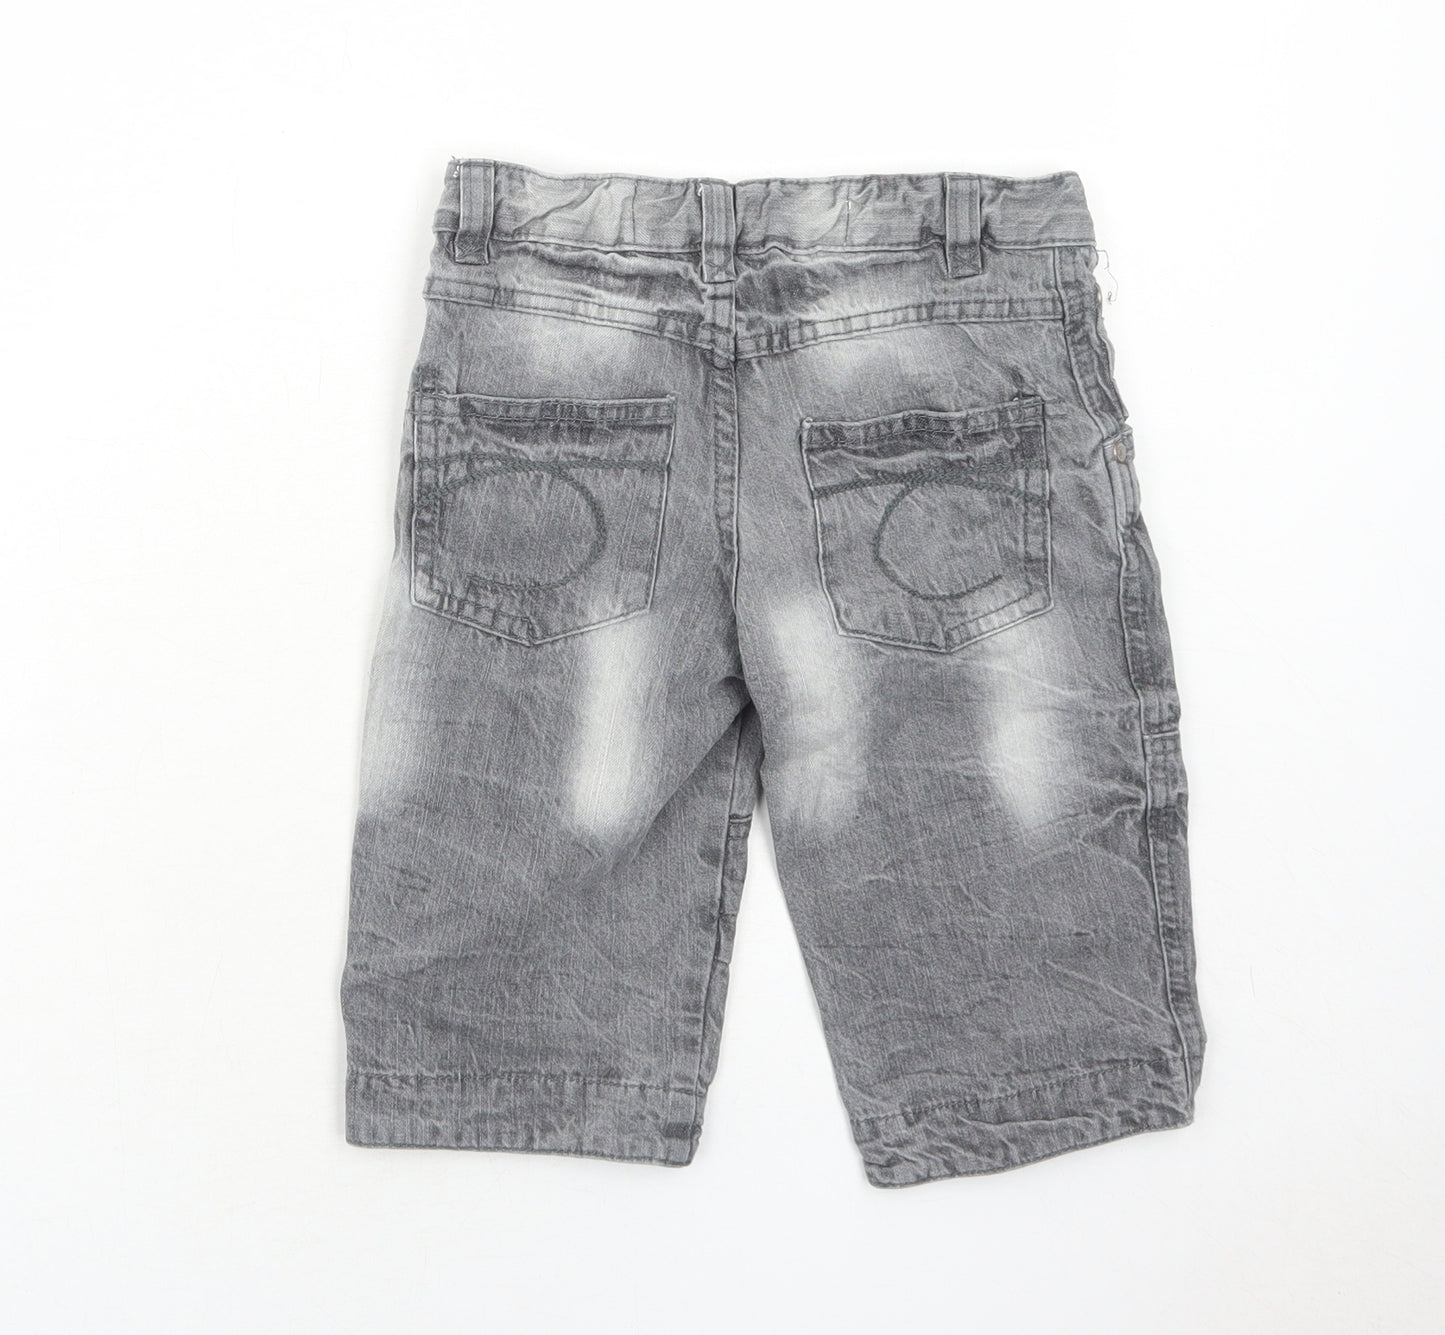 Cotton On Boys Grey Cotton Bermuda Shorts Size 8 Years Regular Zip